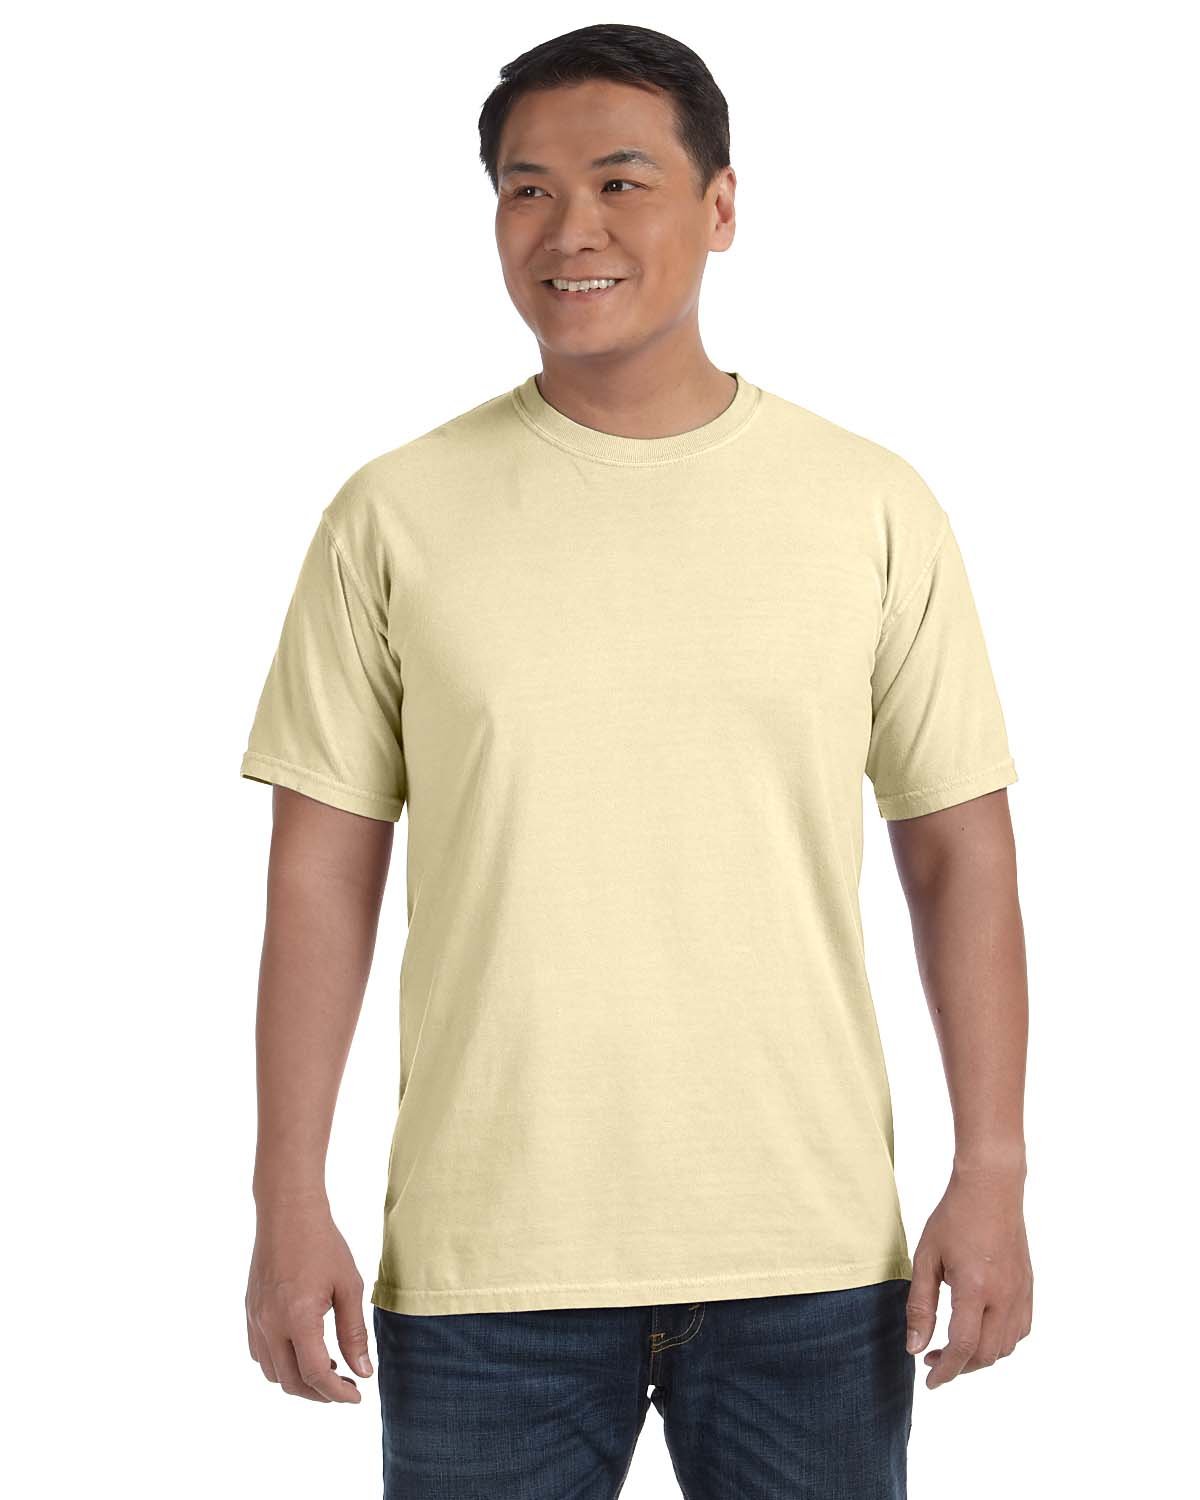 Comfort Colors 6.1 oz. Ringspun Garment-Dyed T-Shirt (C1717) White, XL |  Amazon.com